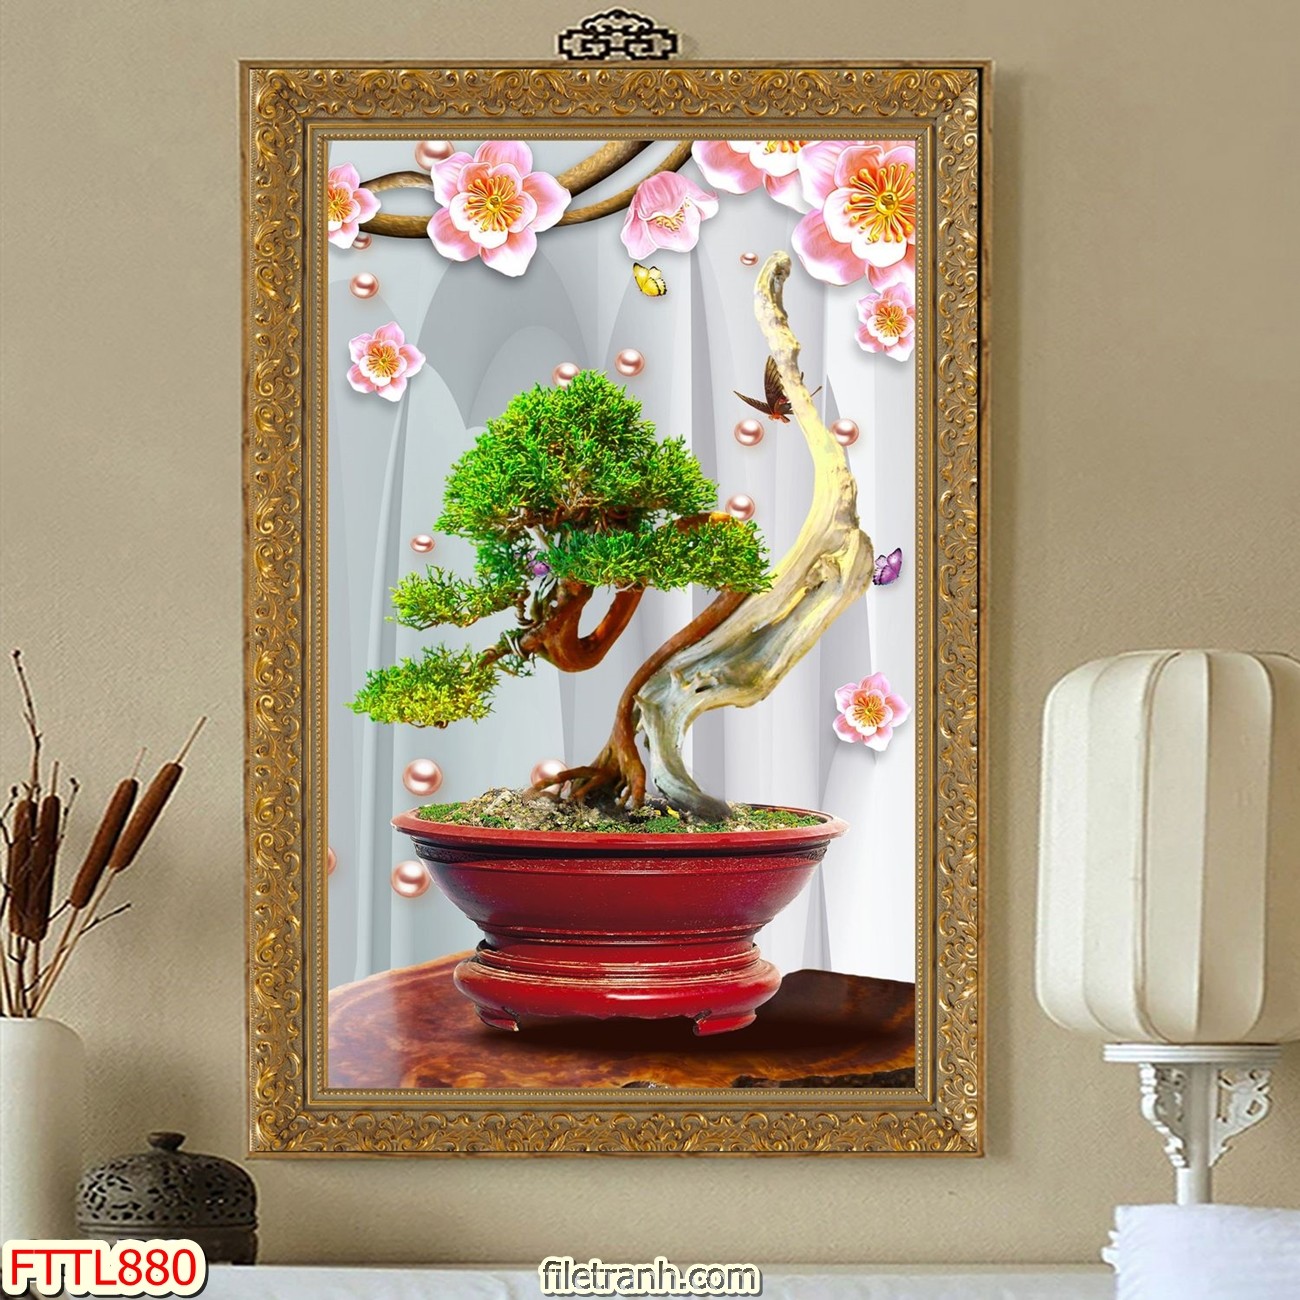 http://filetranh.com/file-tranh-chau-mai-bonsai/file-tranh-chau-mai-bonsai-fttl880.html